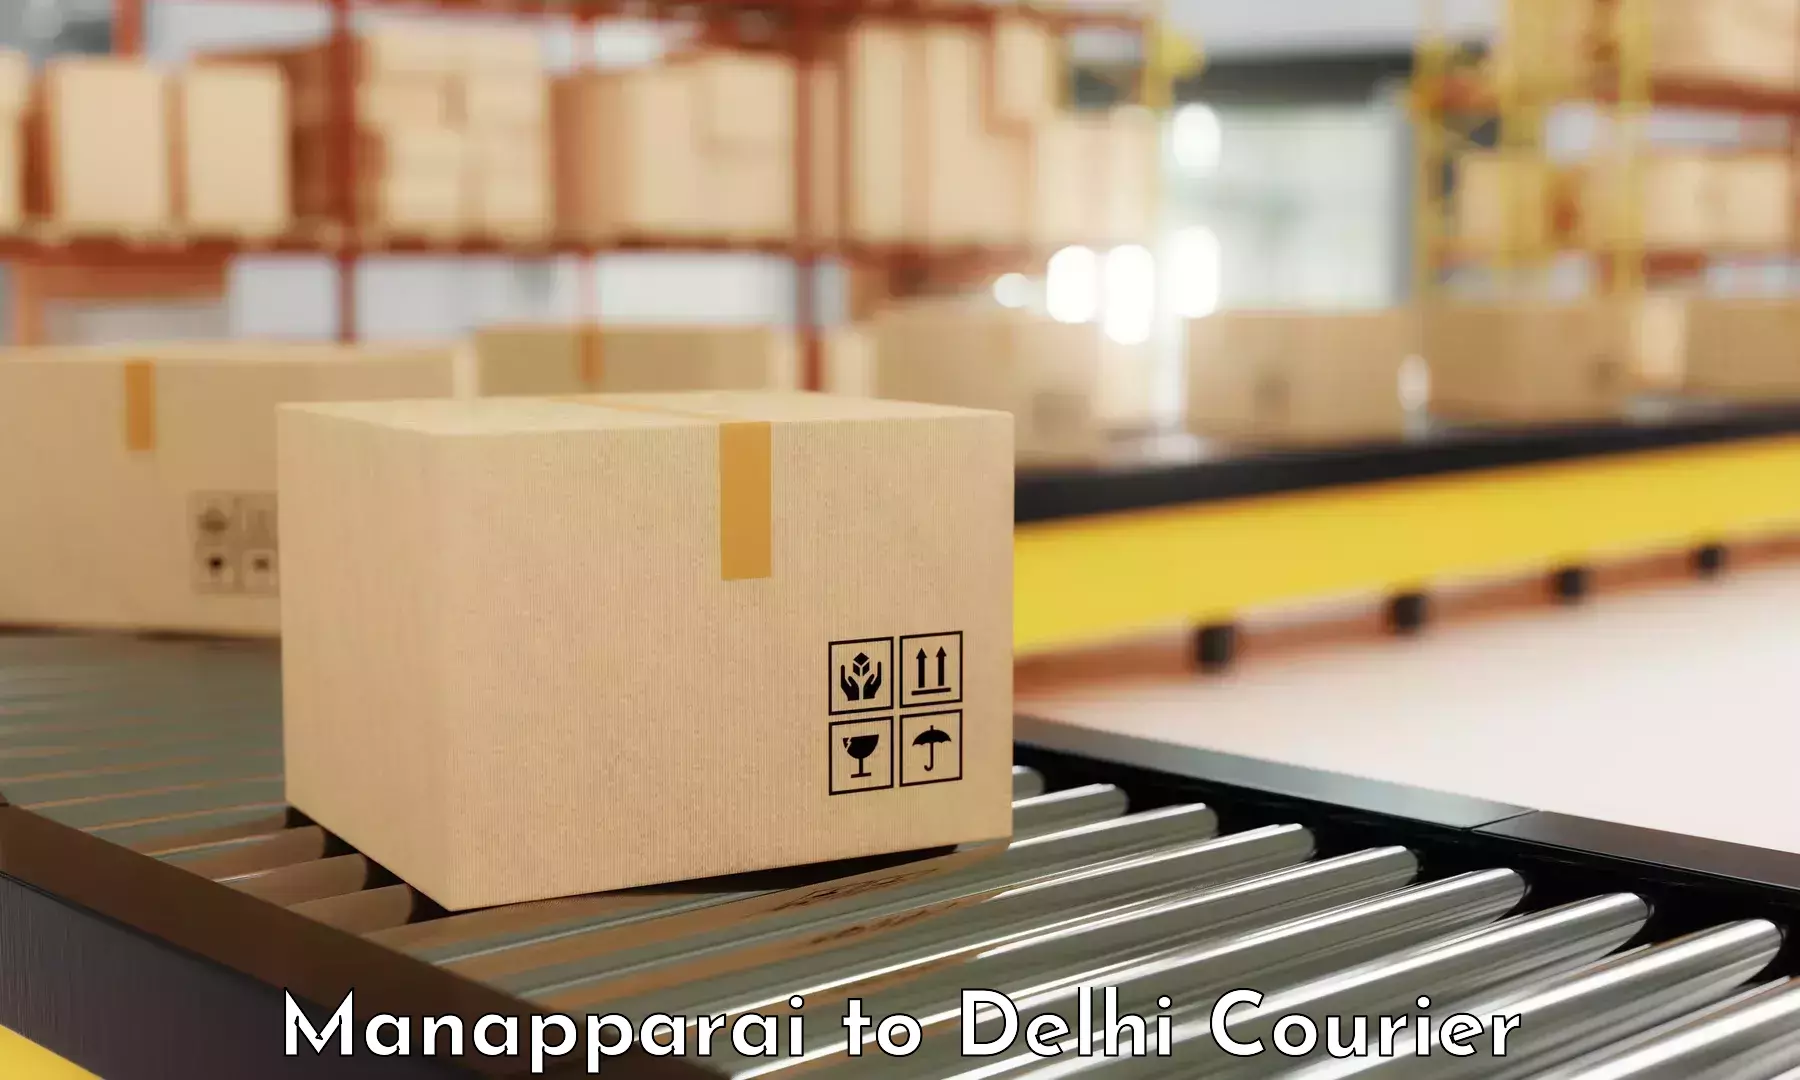 Advanced shipping network Manapparai to East Delhi